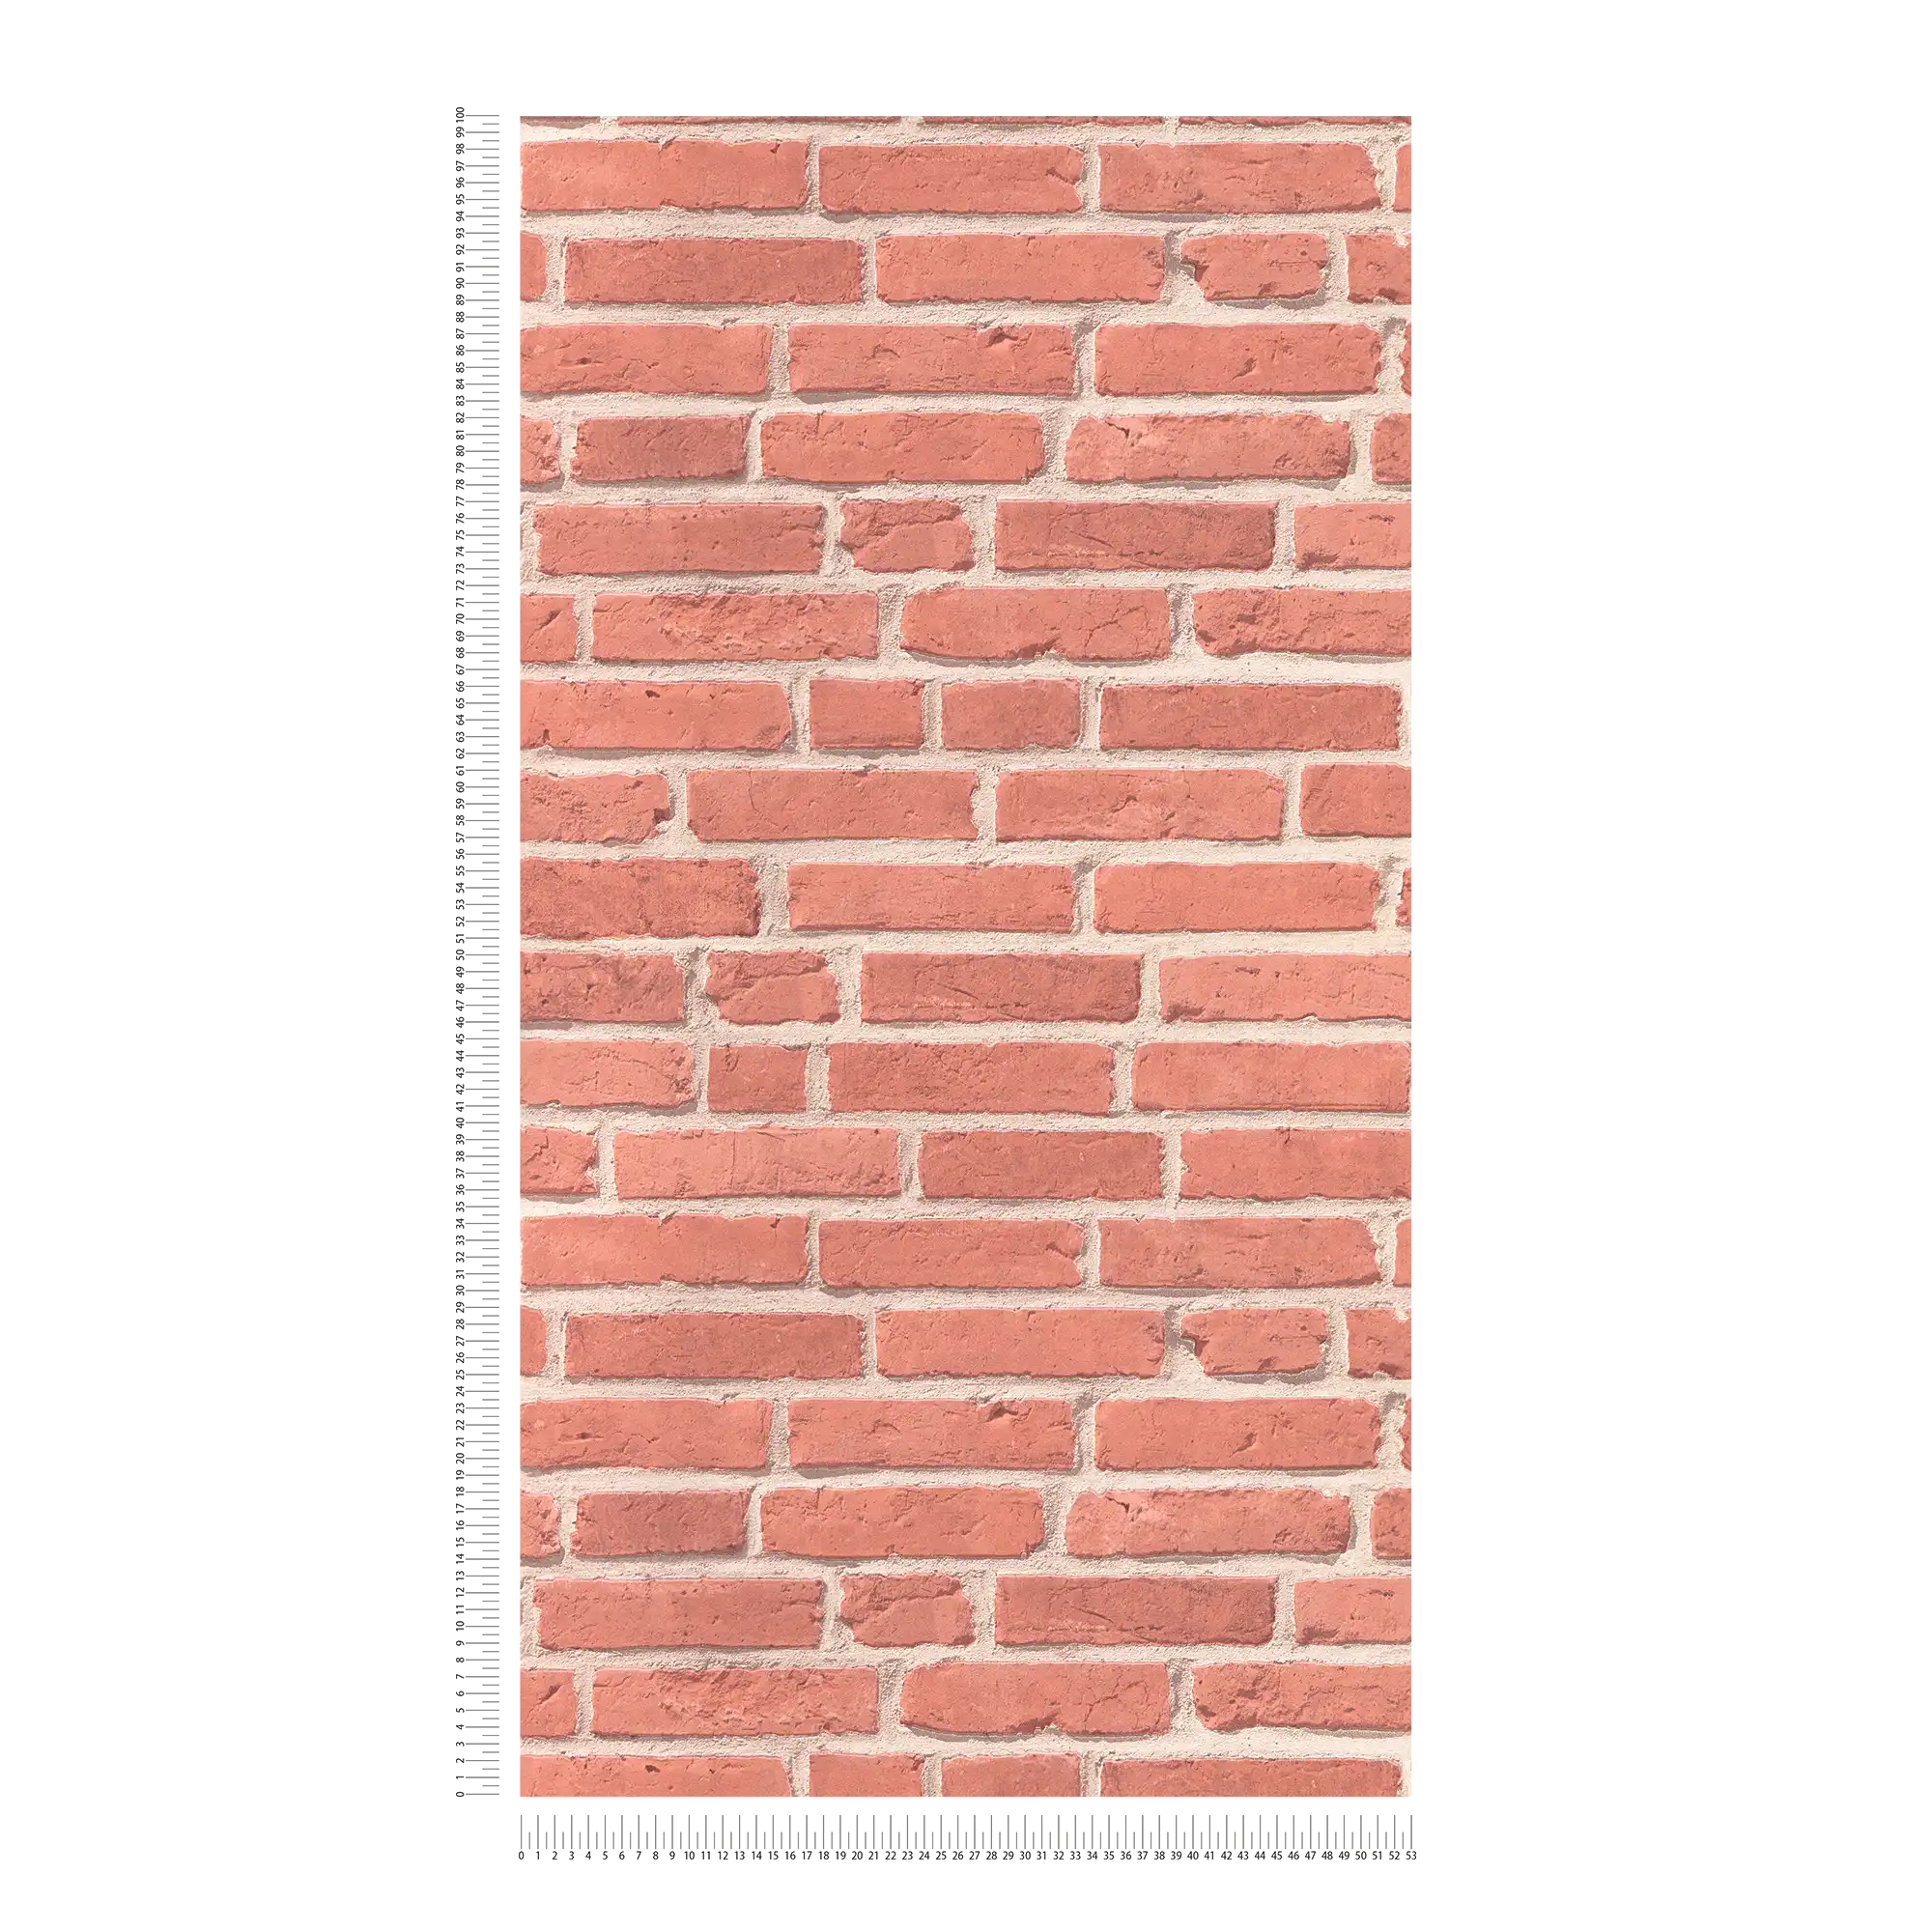             Wallpaper with bricks in clinker look - red, beige
        